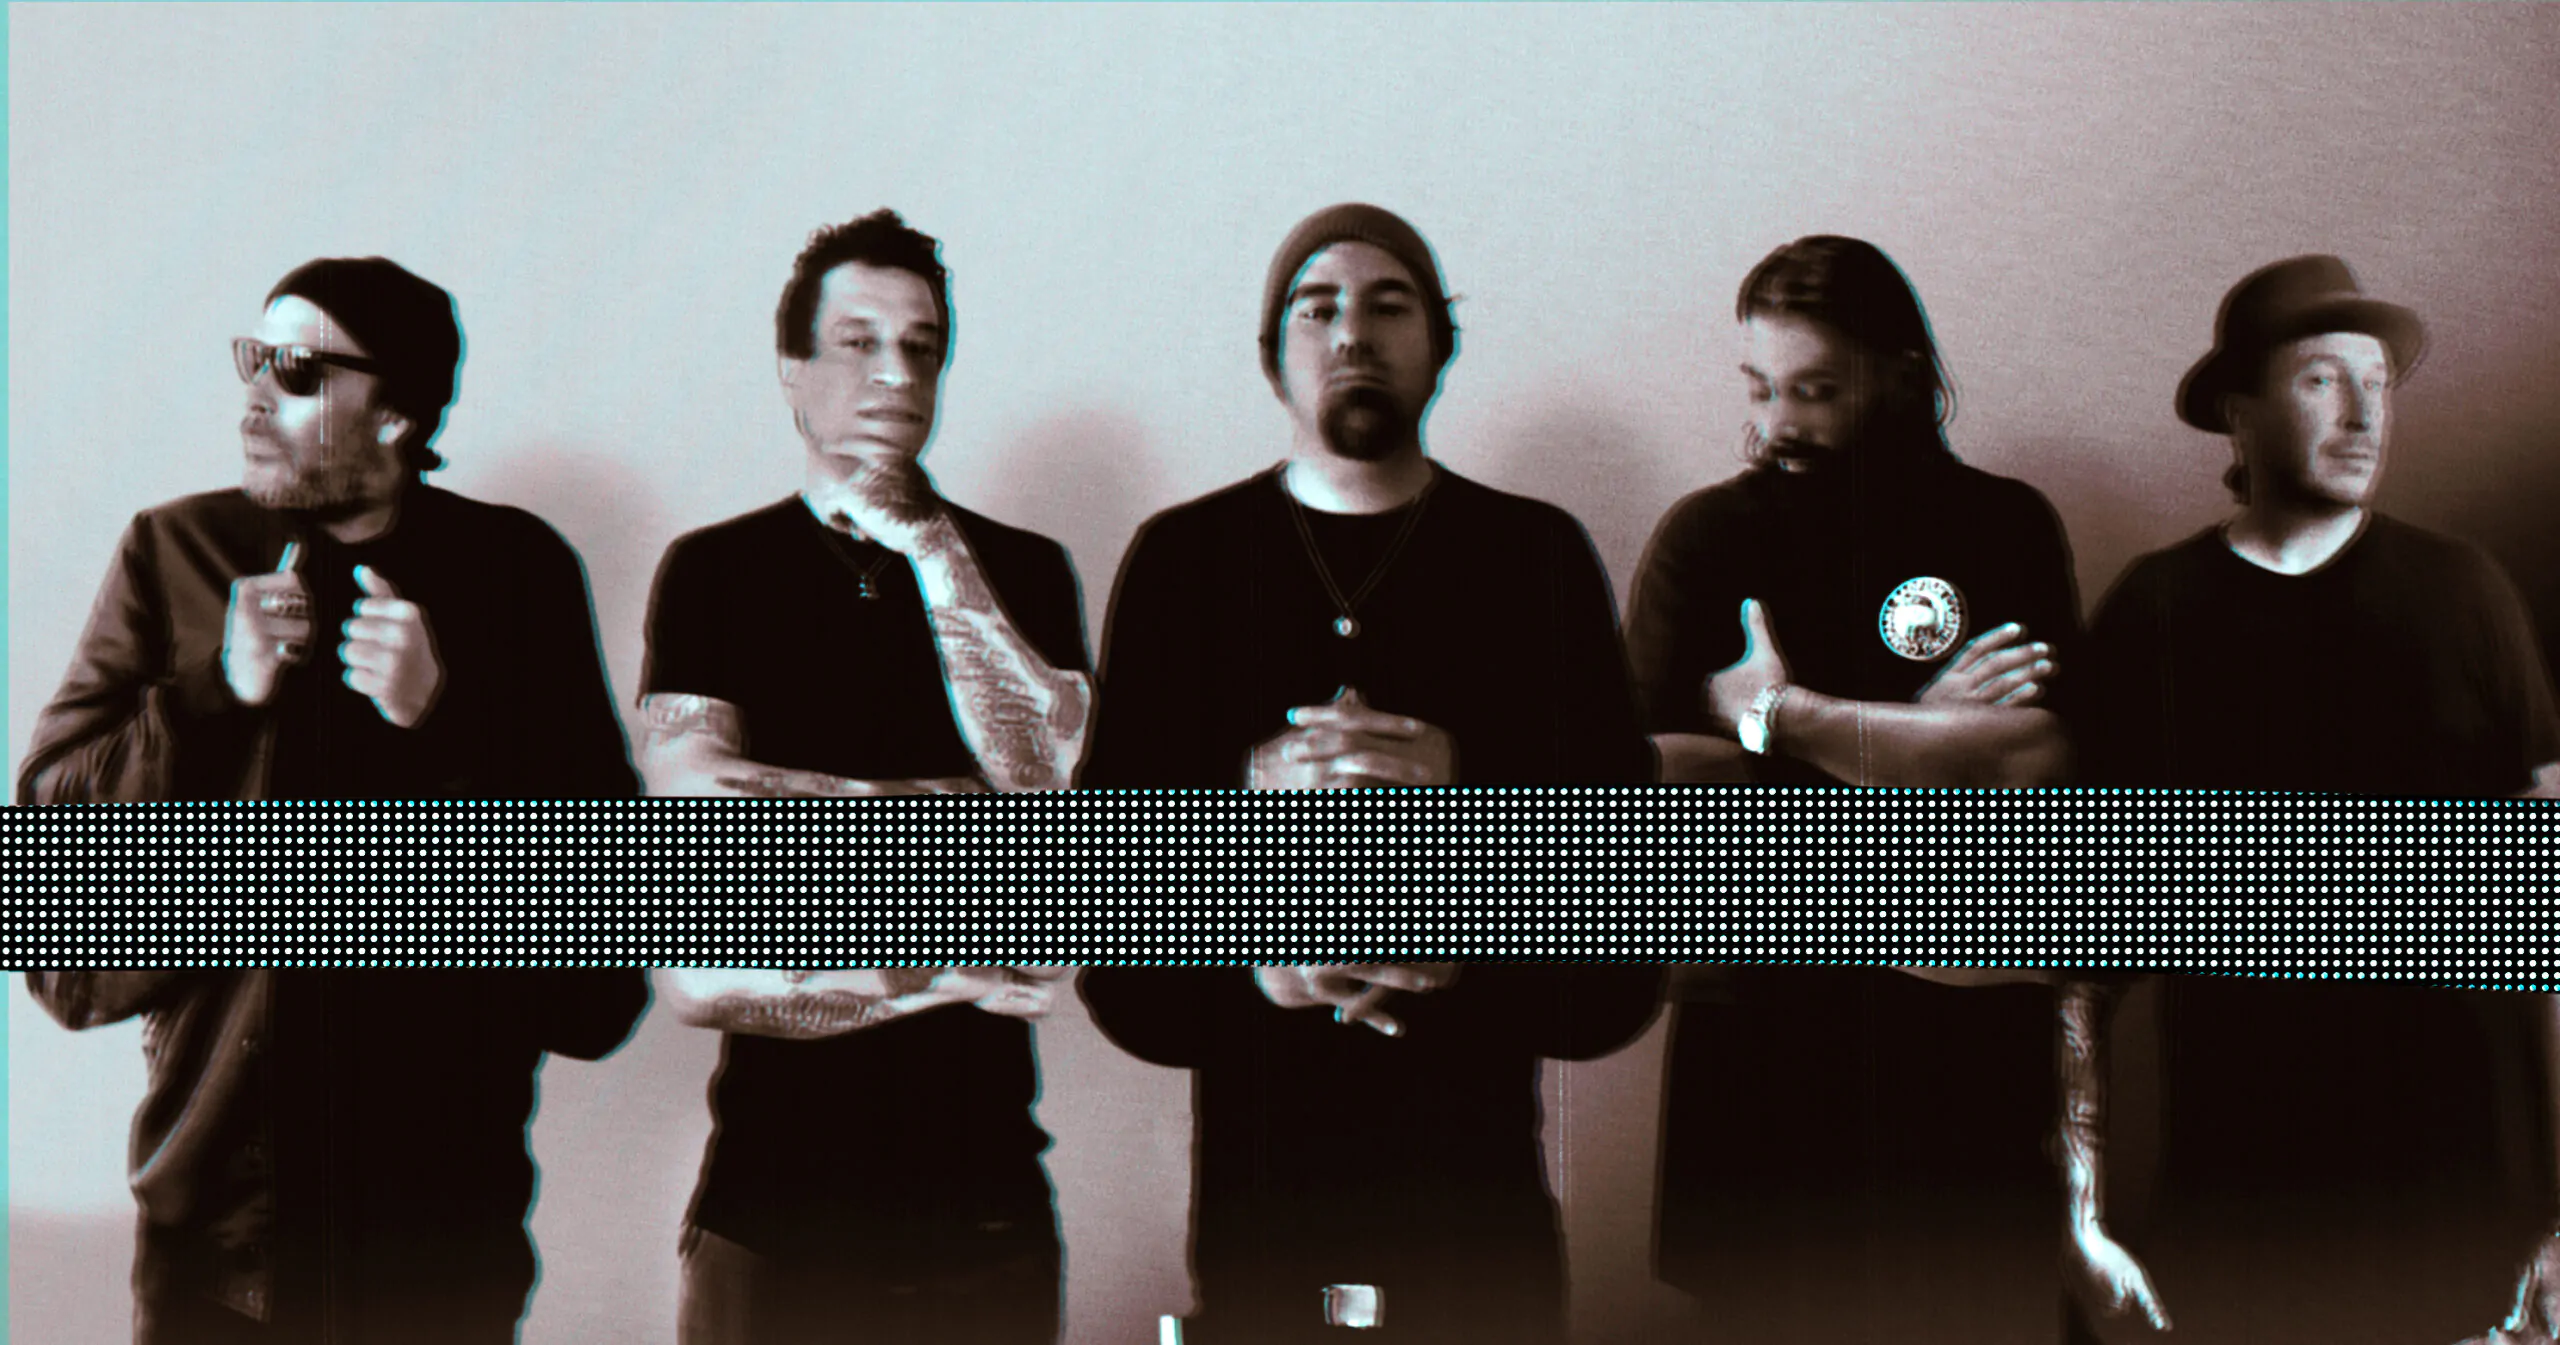 DEFTONES unveil new track ‘Passenger’ (Mike Shinoda Remix) – Listen Now!